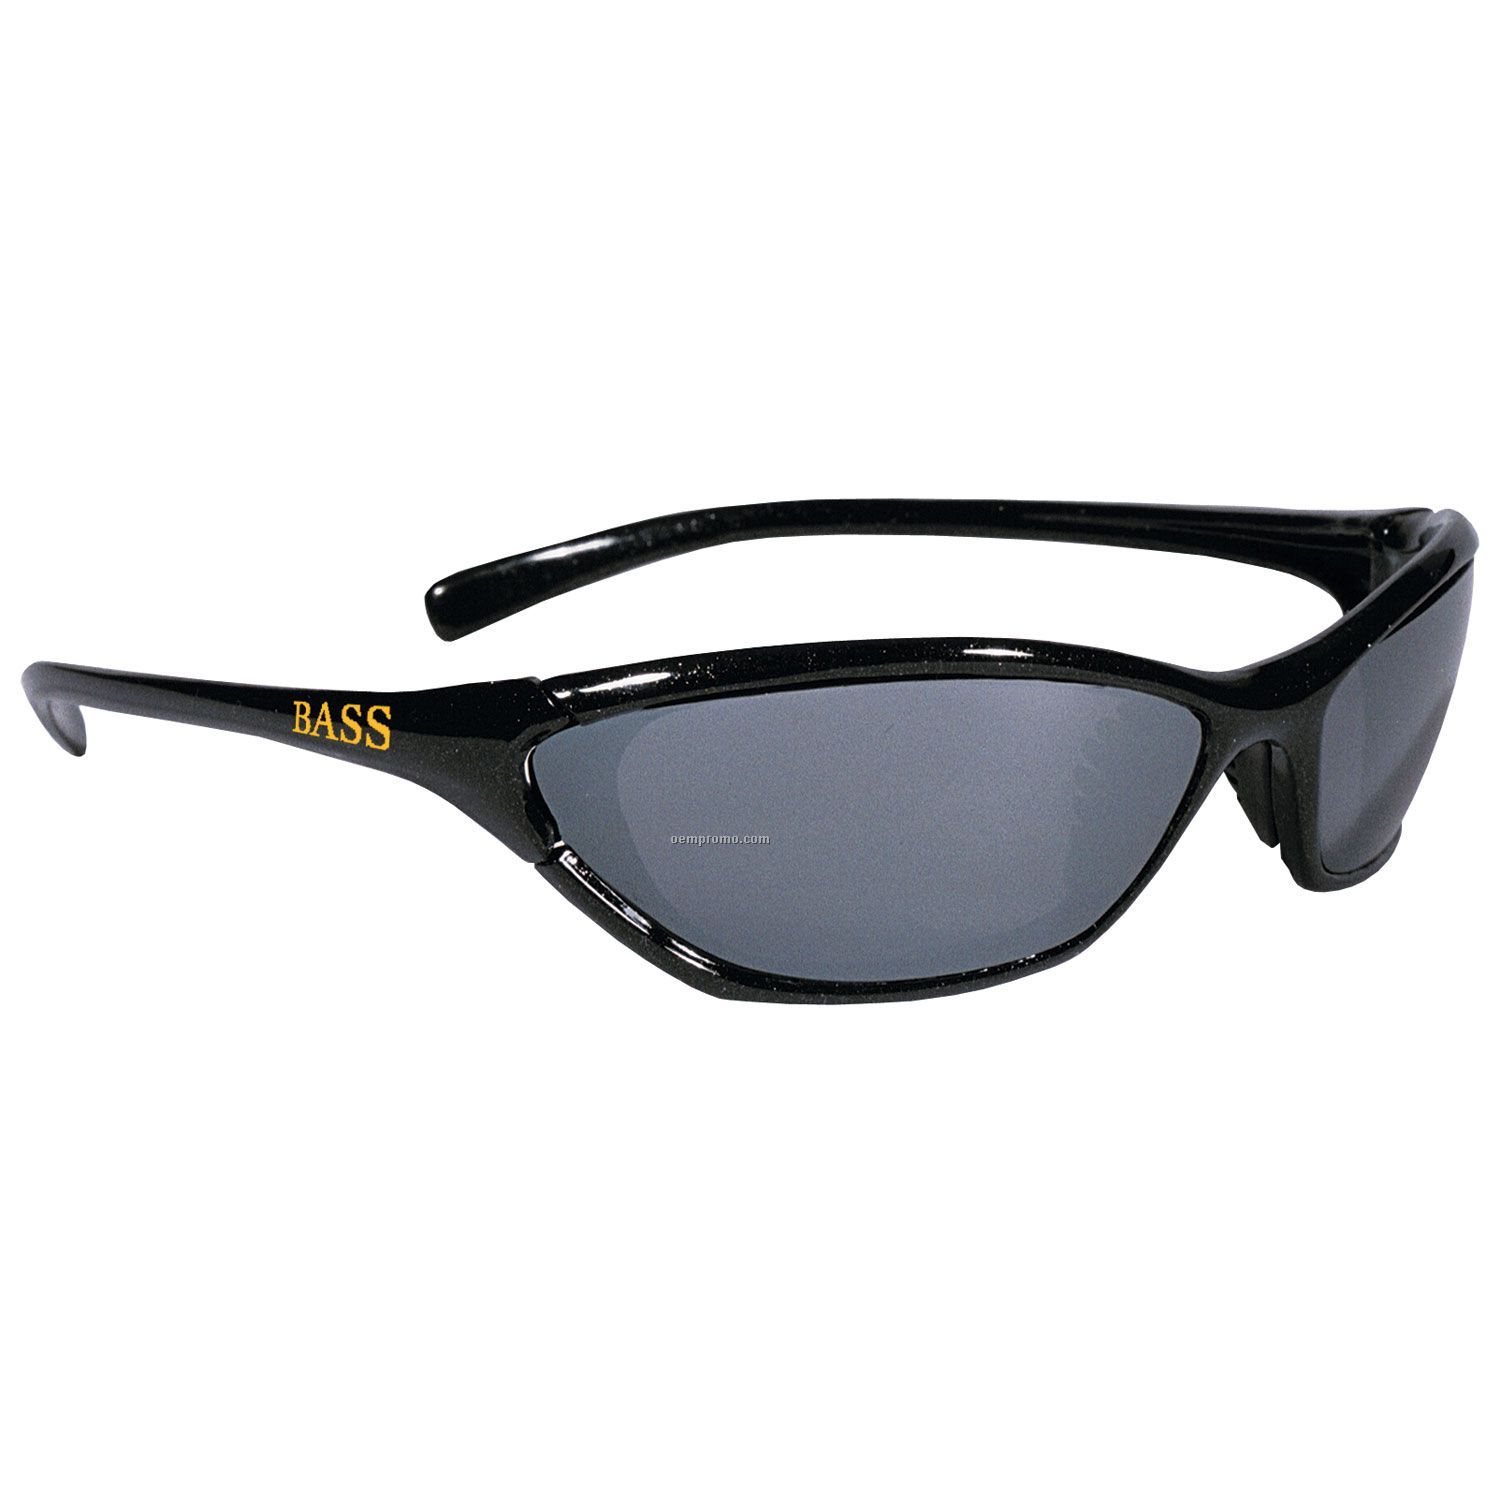 Rio Sport Wraps Mission Impossible Black Frame Sunglasses W/ Gray Lens